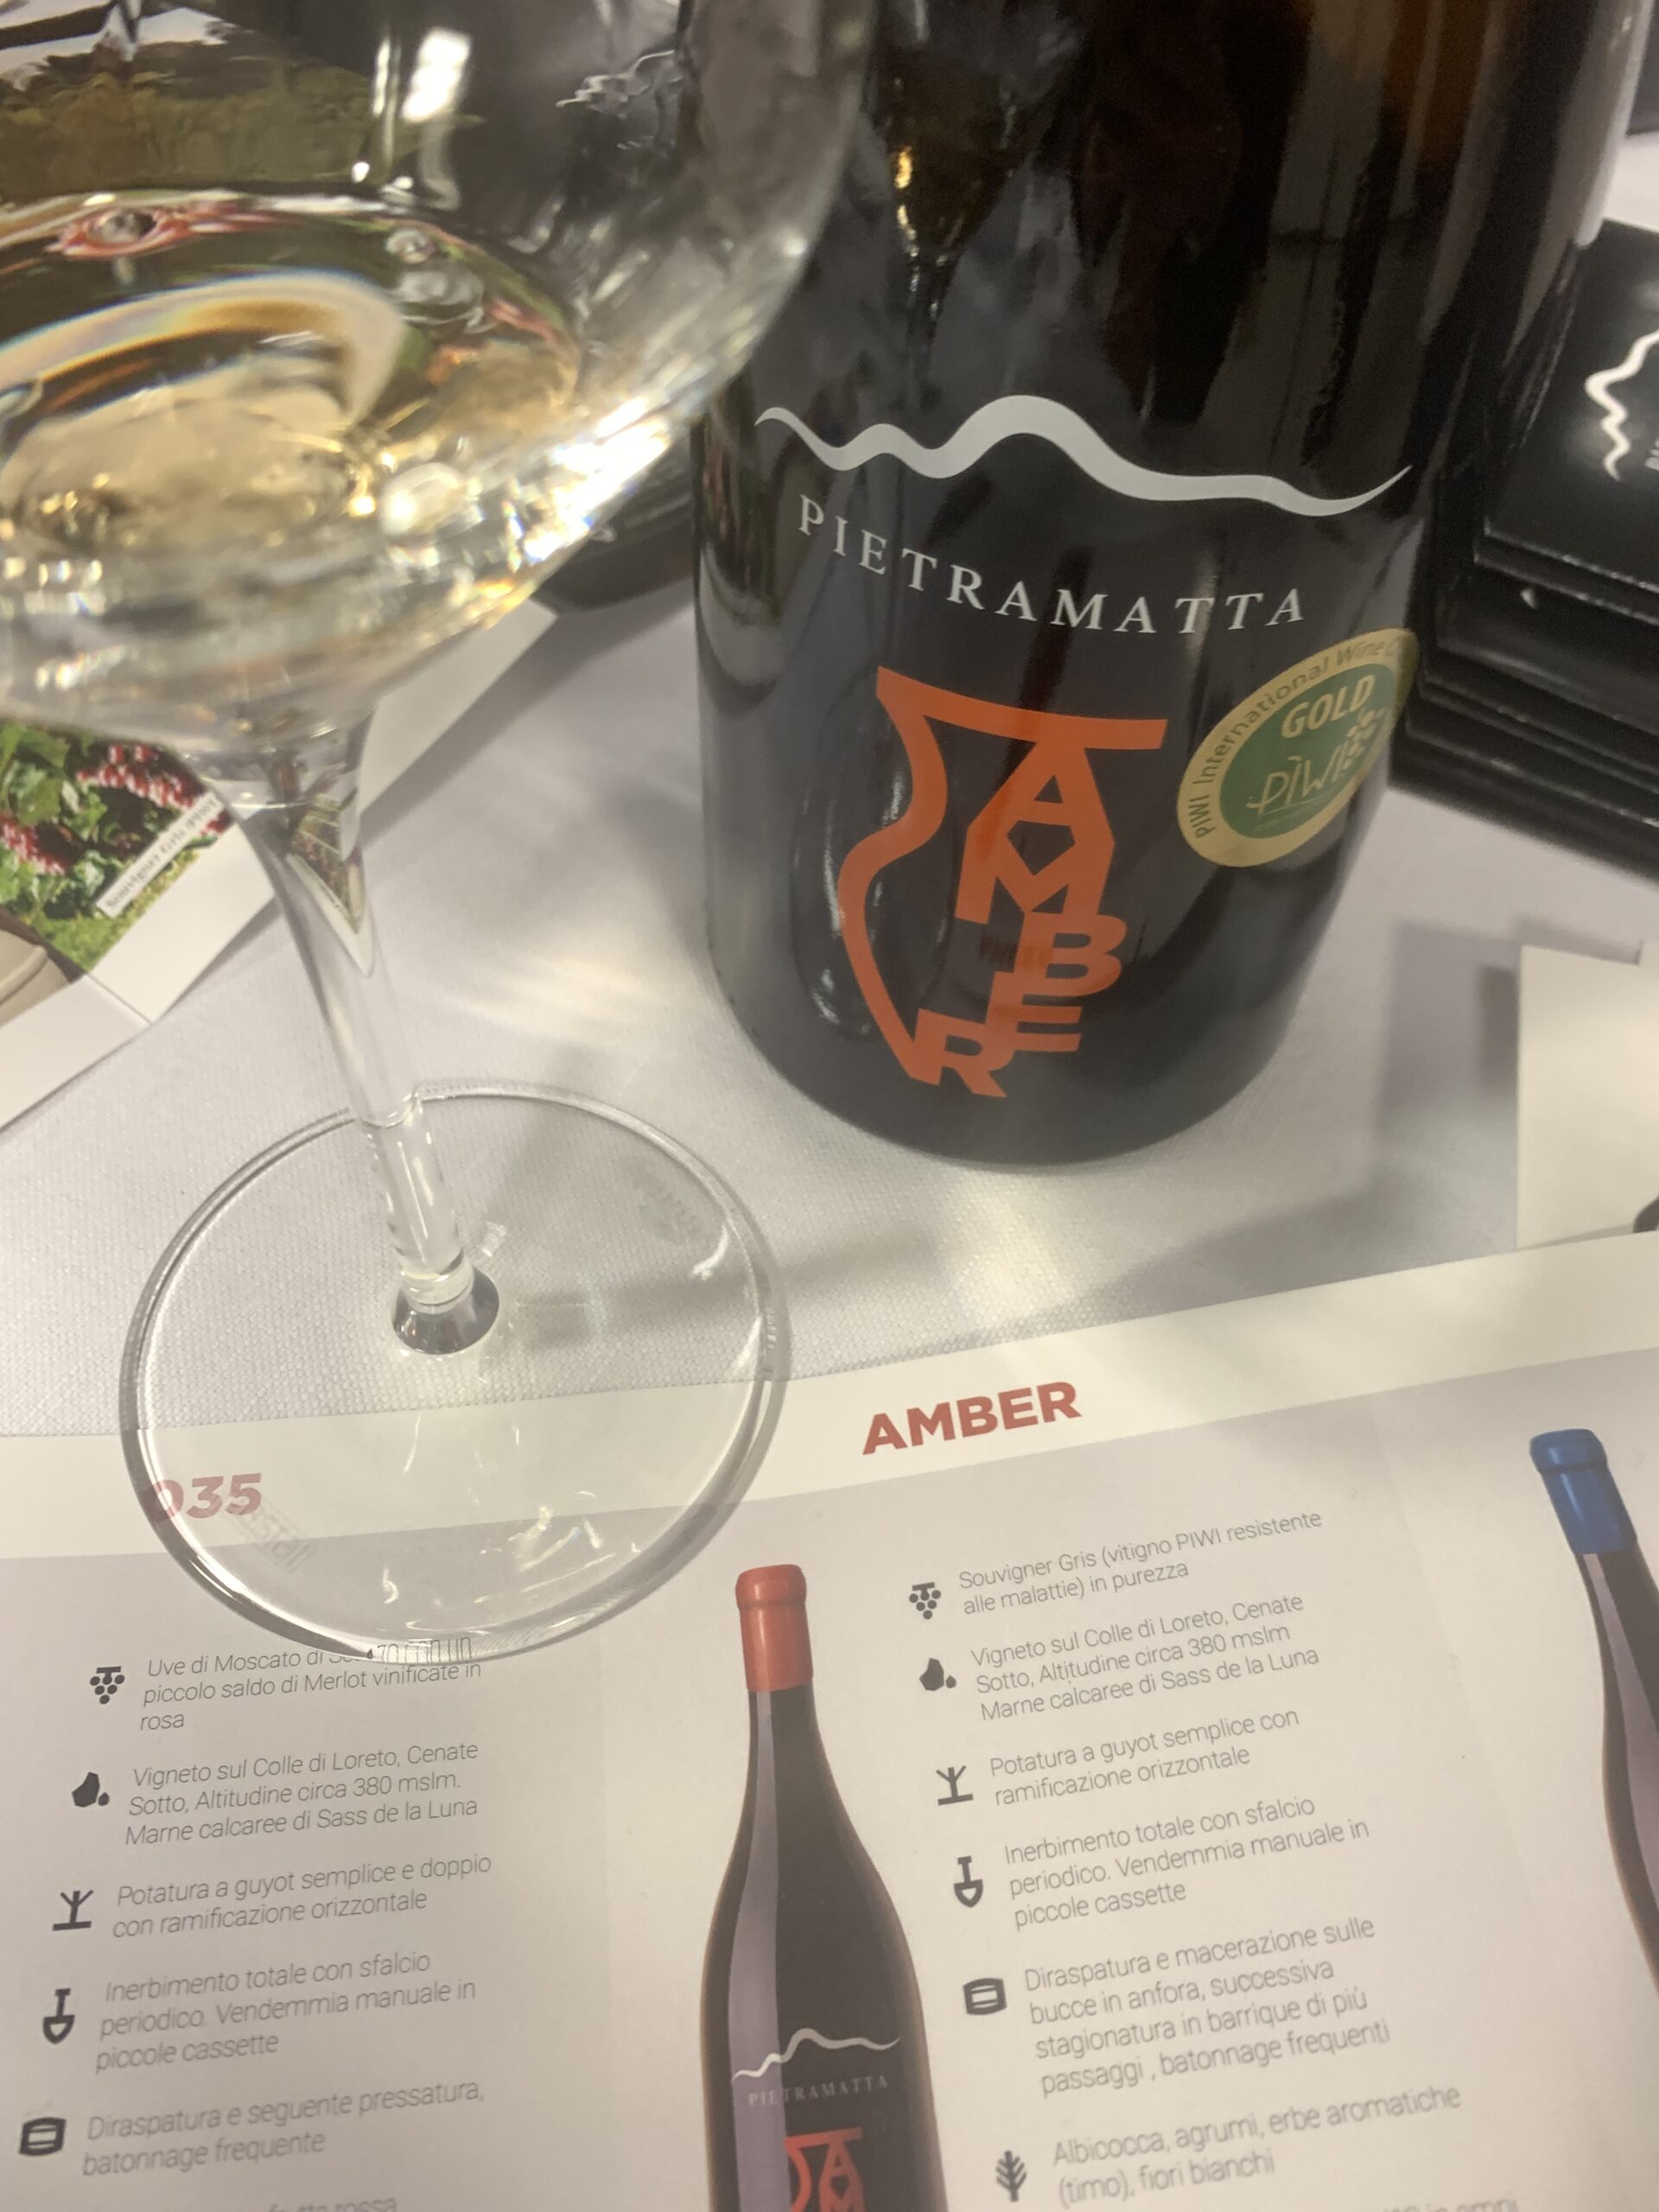 Award winning Pietramatta Amber: a premium Orange Wine which tells a tale of Love